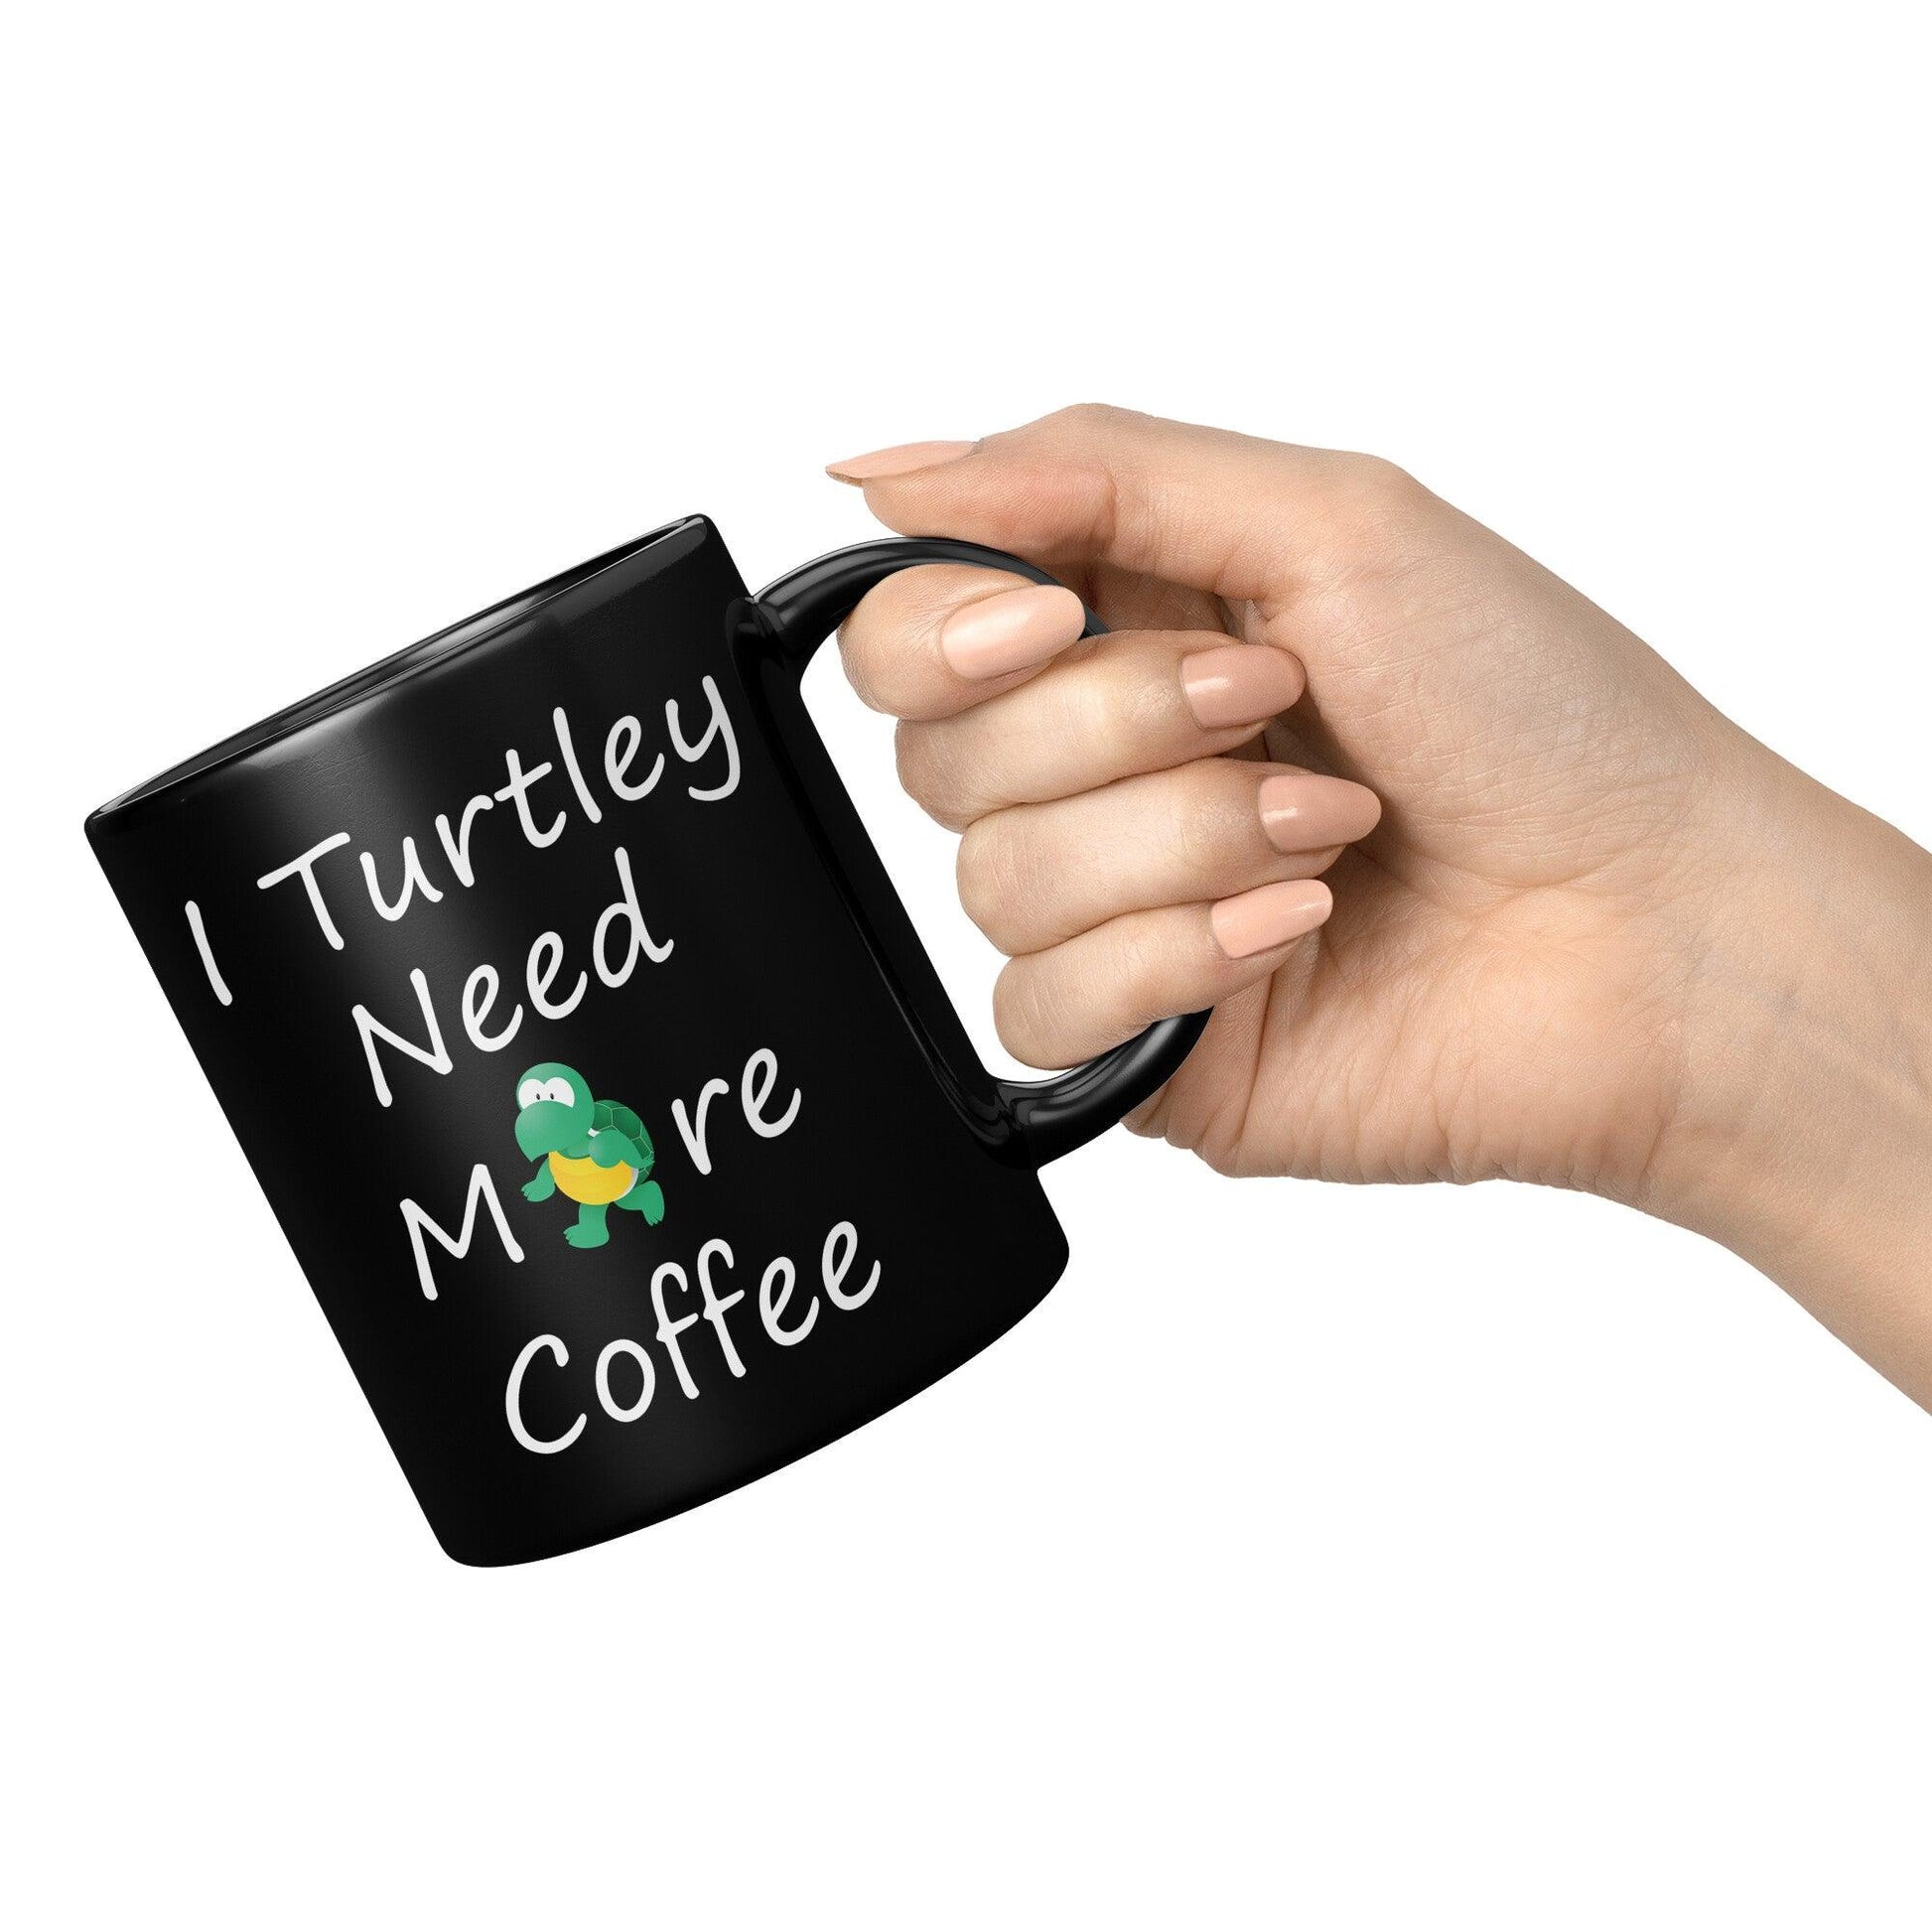 I Turtley Need More Coffee Black Mug - TheGivenGet